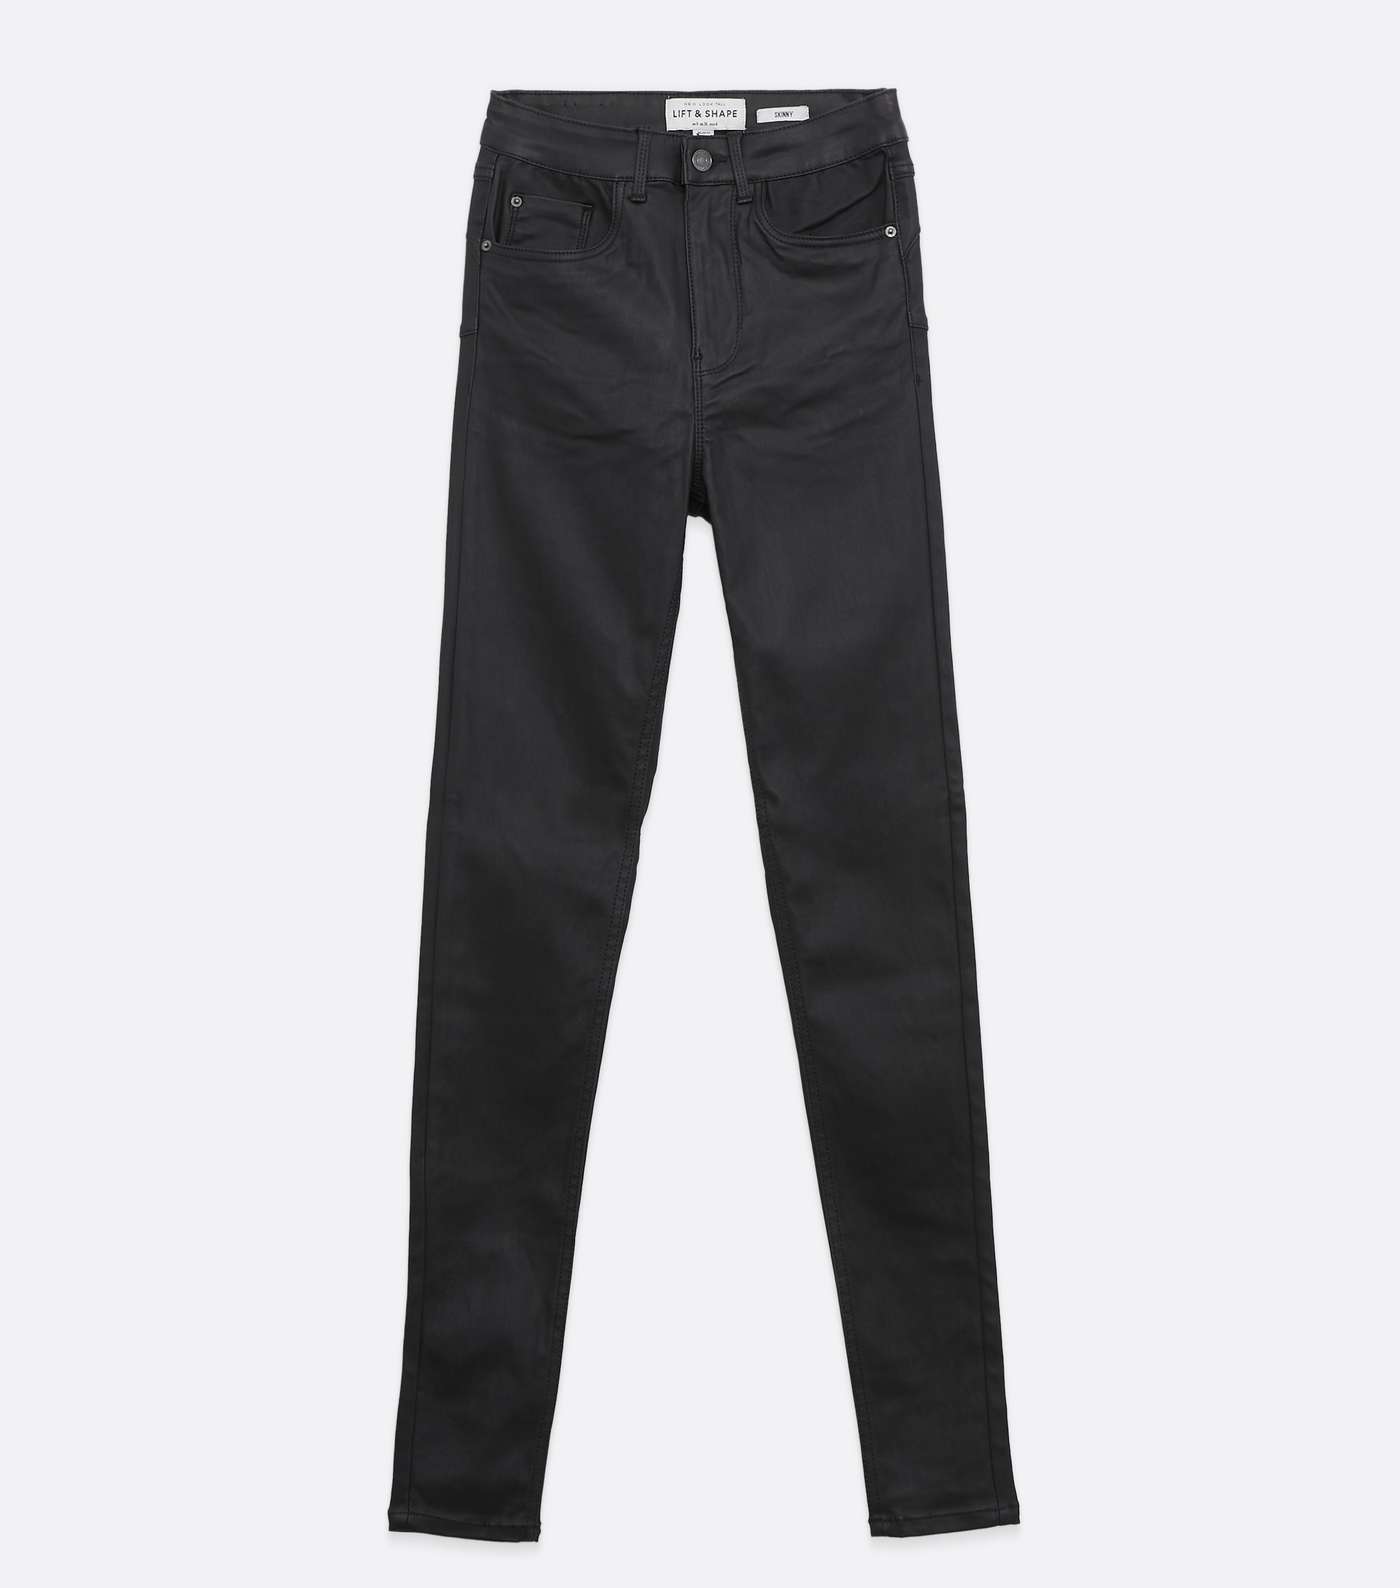 Tall Black Coated Leather-Look 'Lift & Shape' Jenna Skinny Jeans Image 5